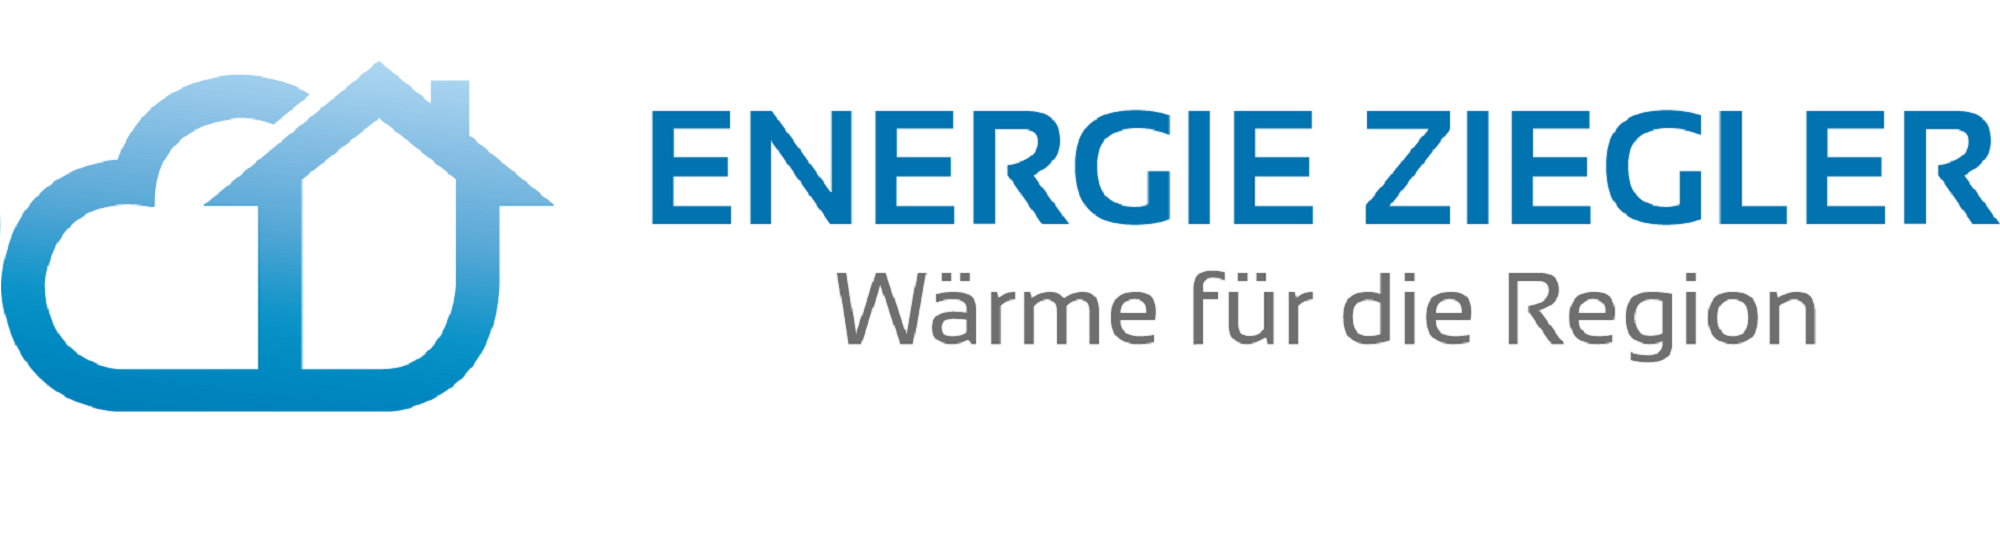 Energie Ziegler GmbH